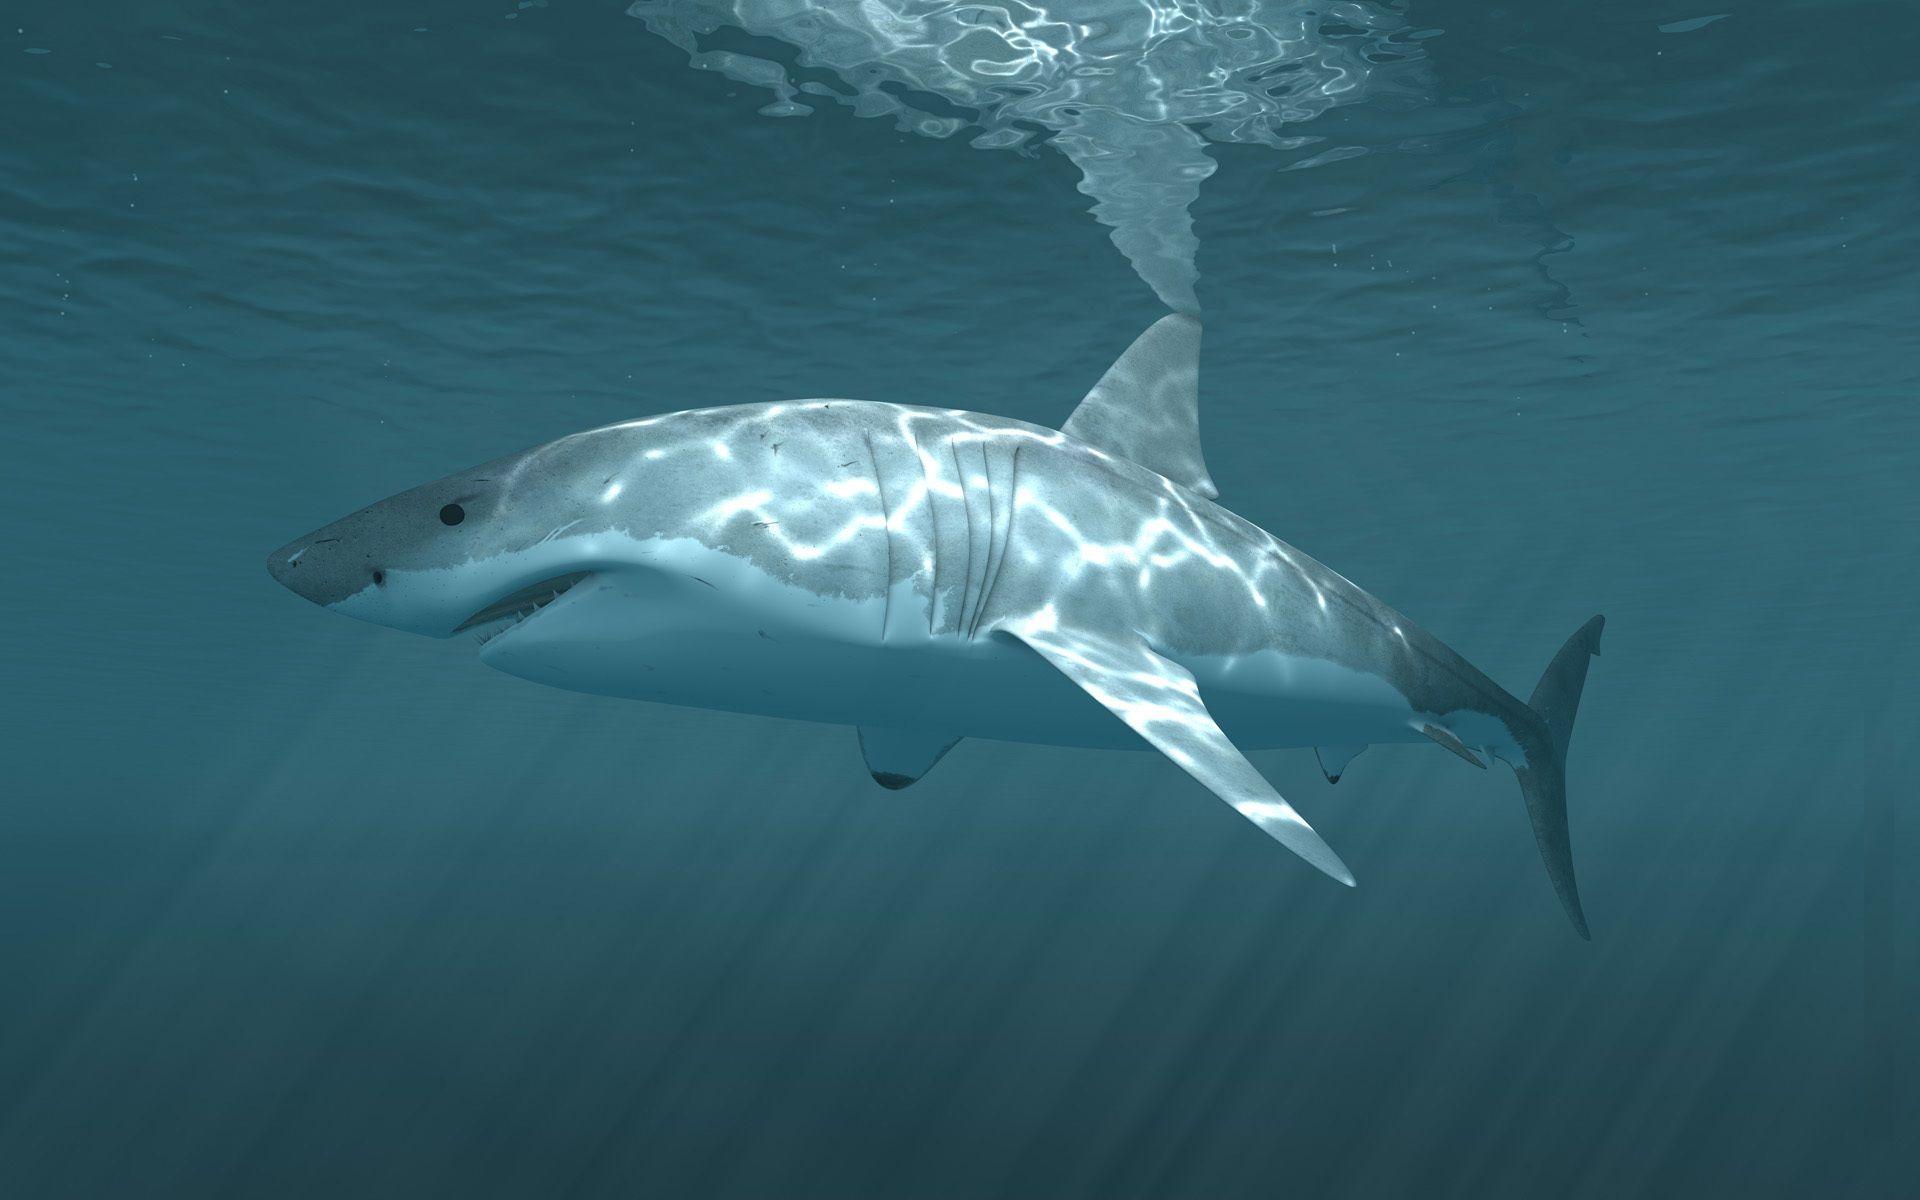 Dangerous Shark HD Wallpaper Free Download. HD Wallpaper Free Download. White sharks, Shark picture, Great white shark